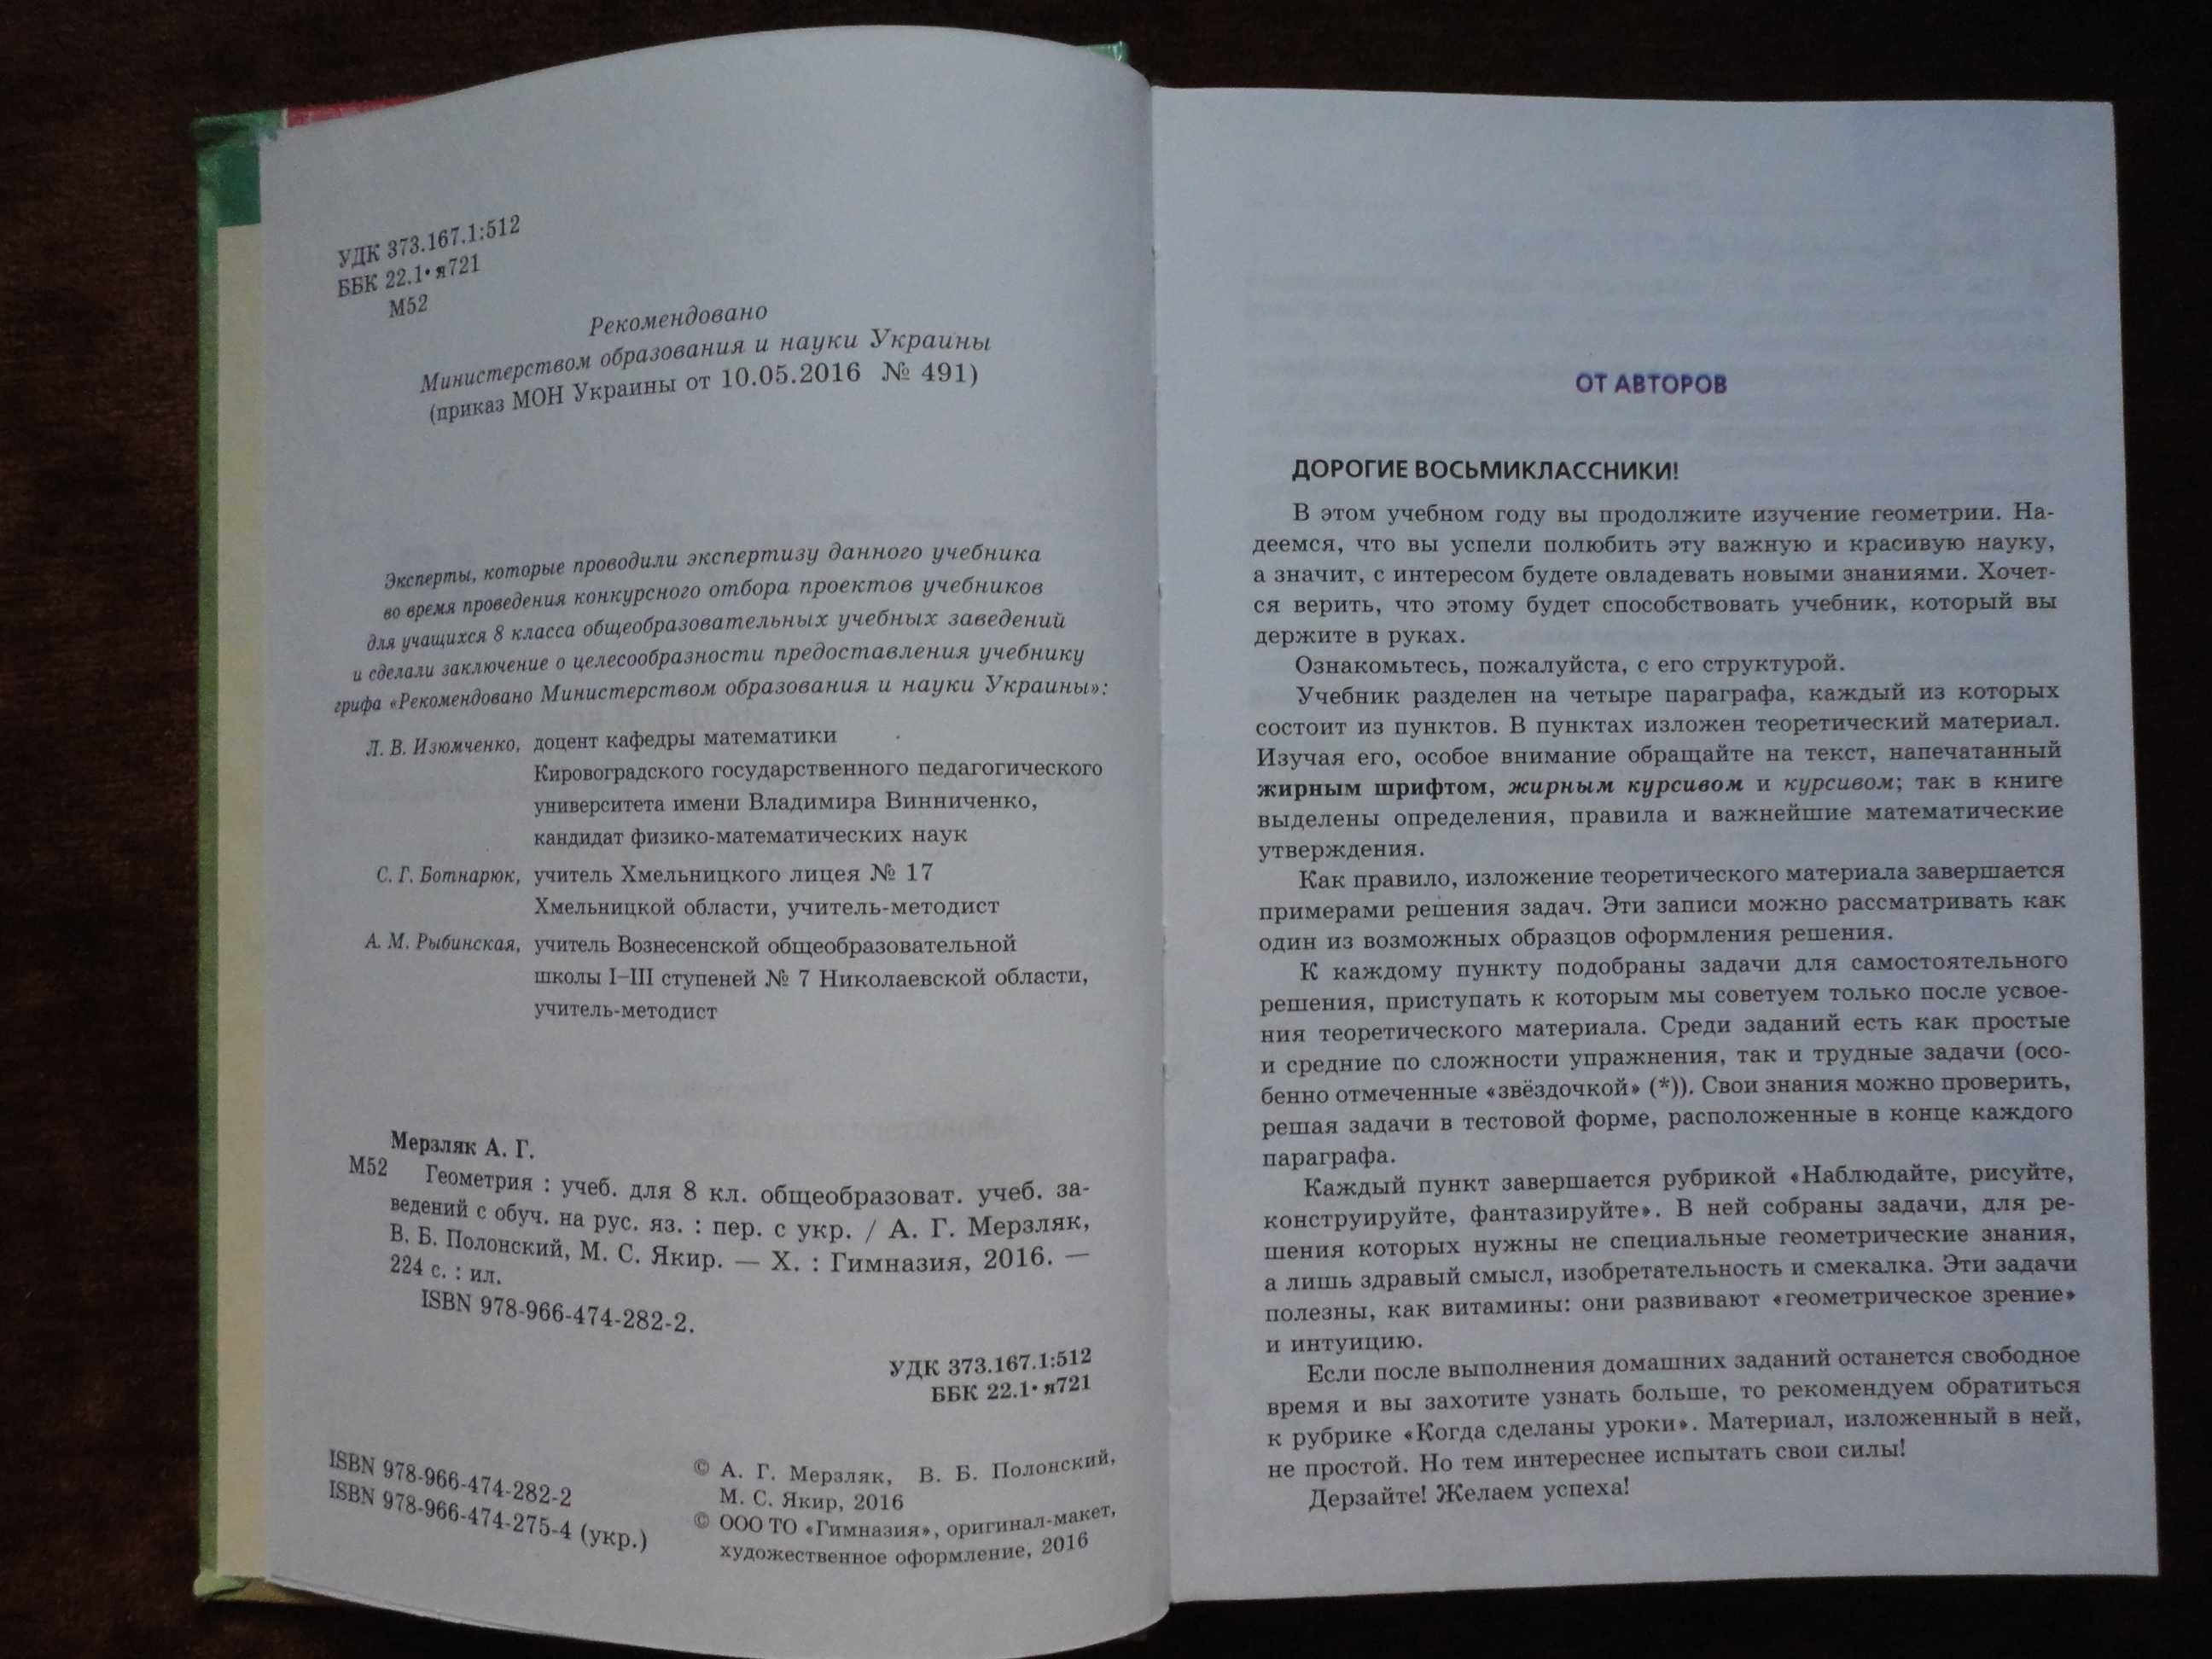 Учебник 8 класс. Геометрия RU. Мерзляк, Полонский, Якир